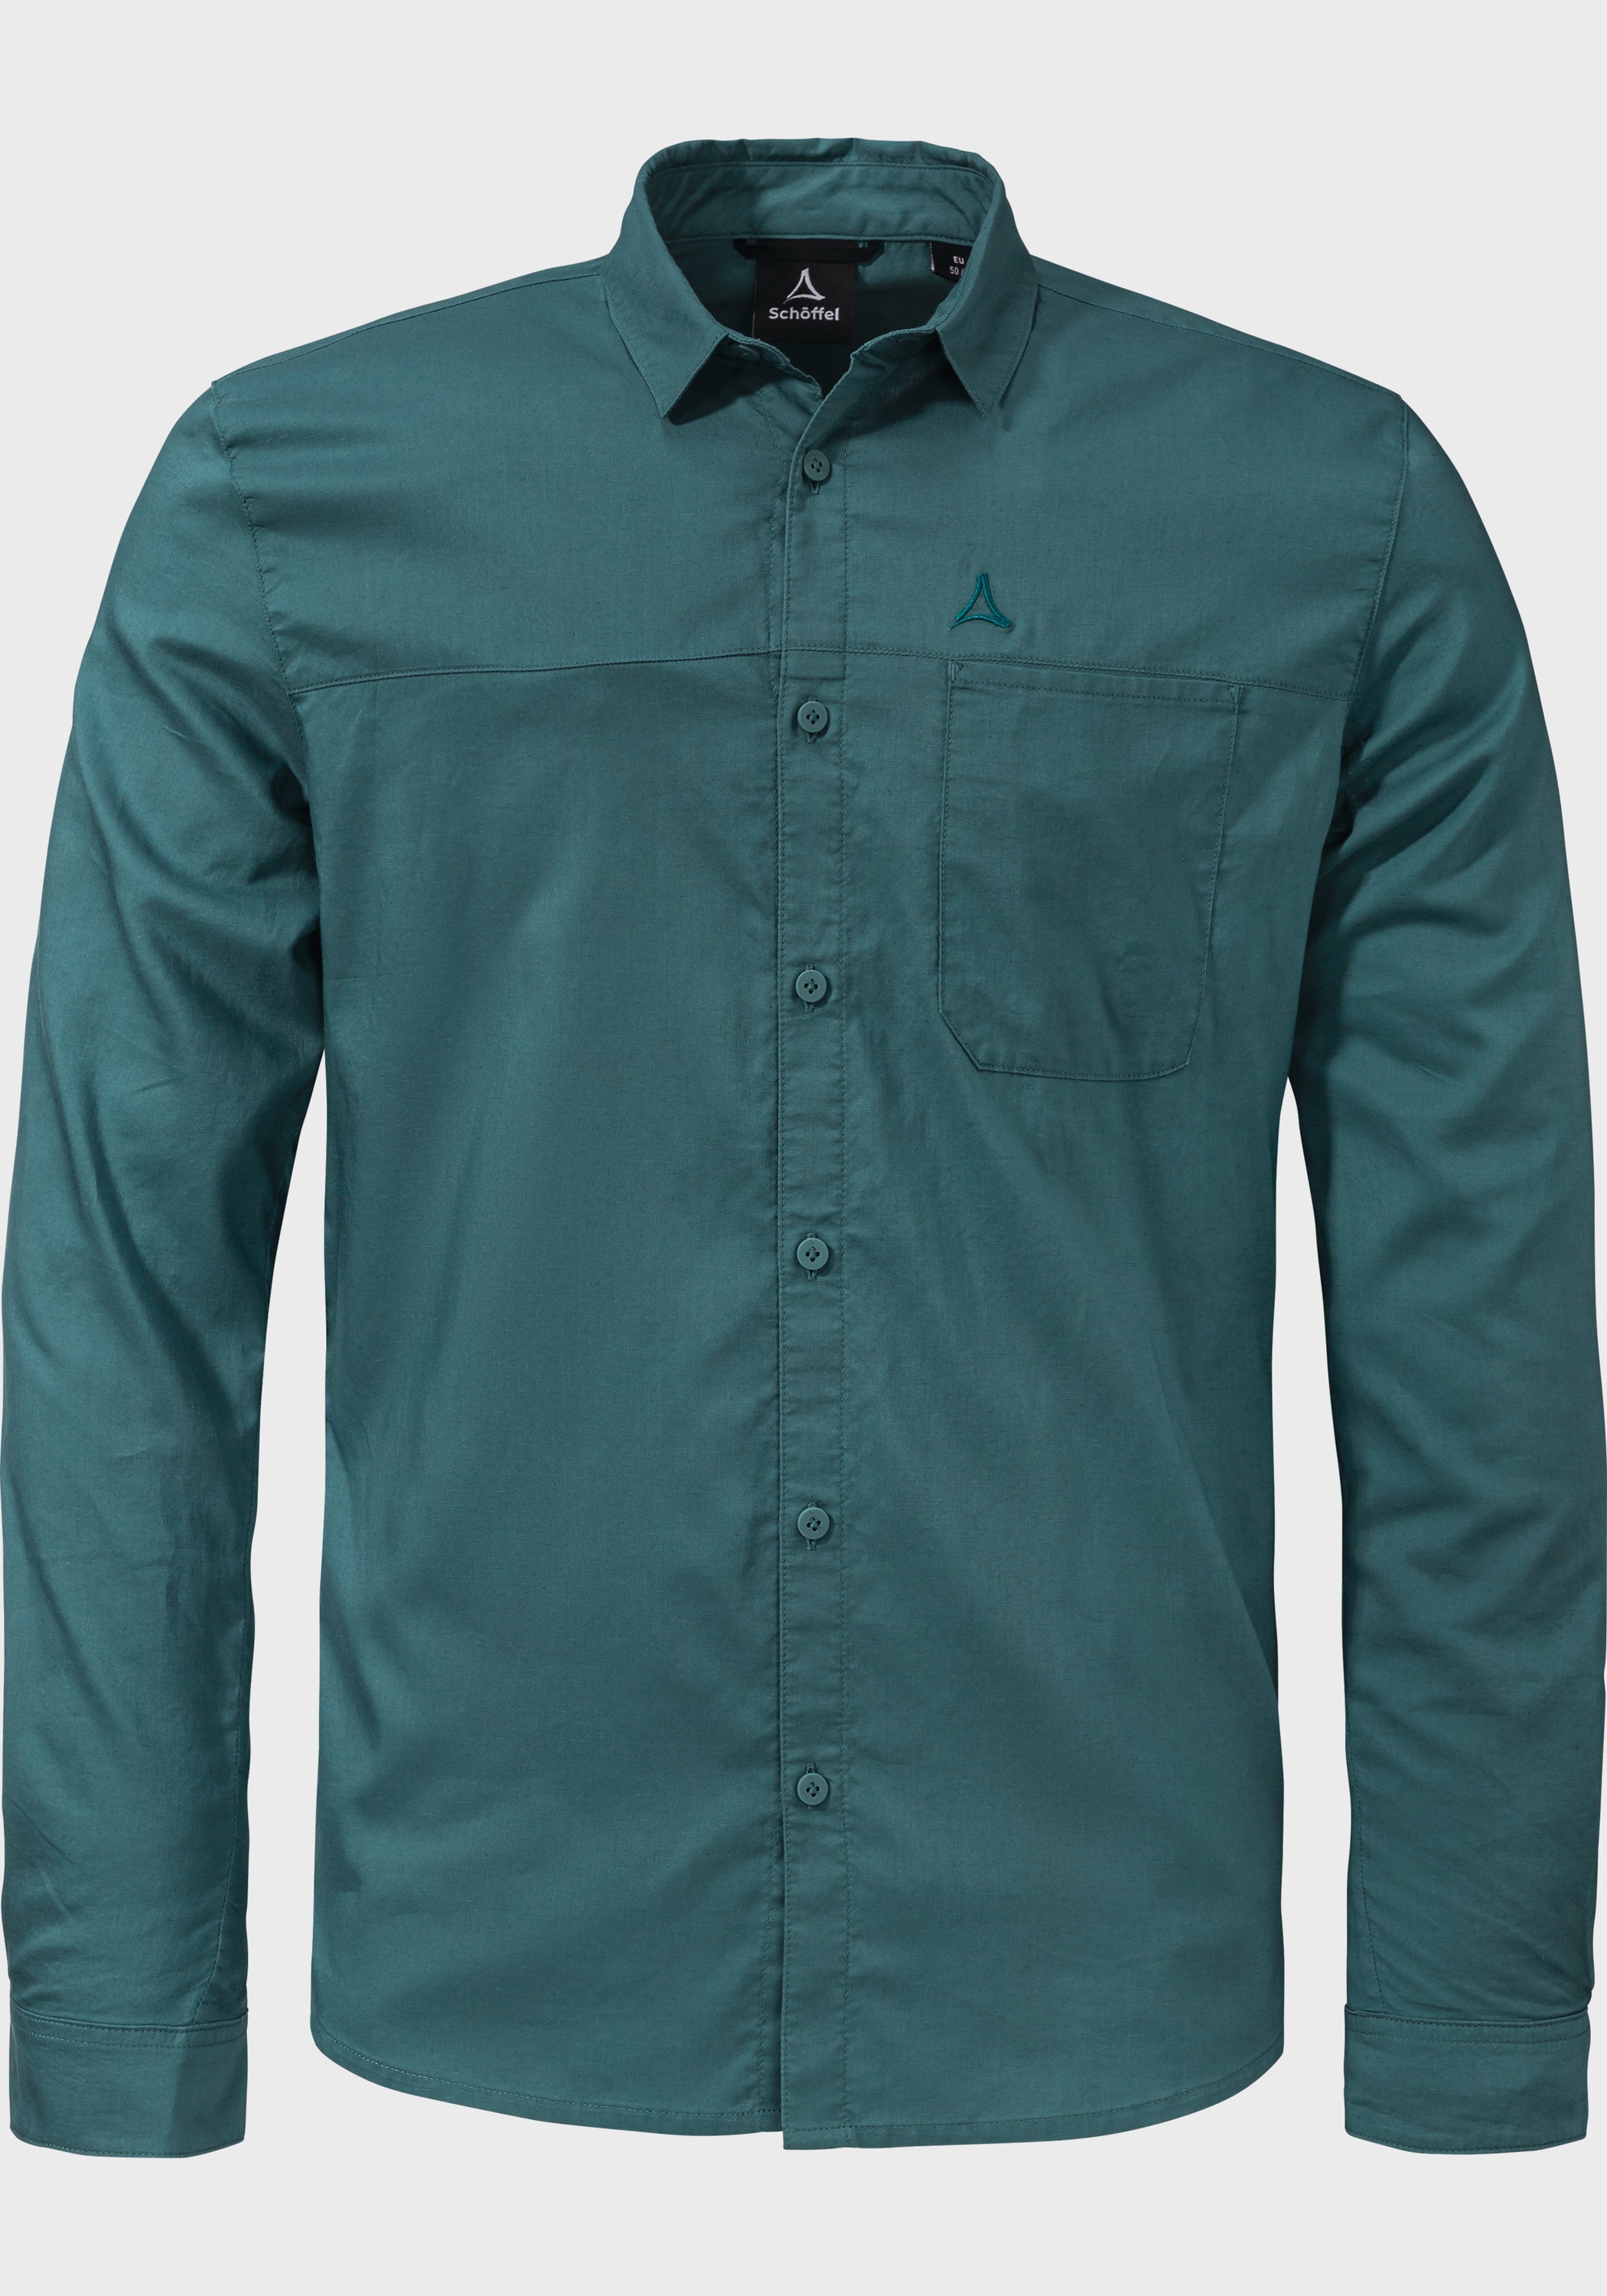 Outdoorhemd »Shirt Treviso M«